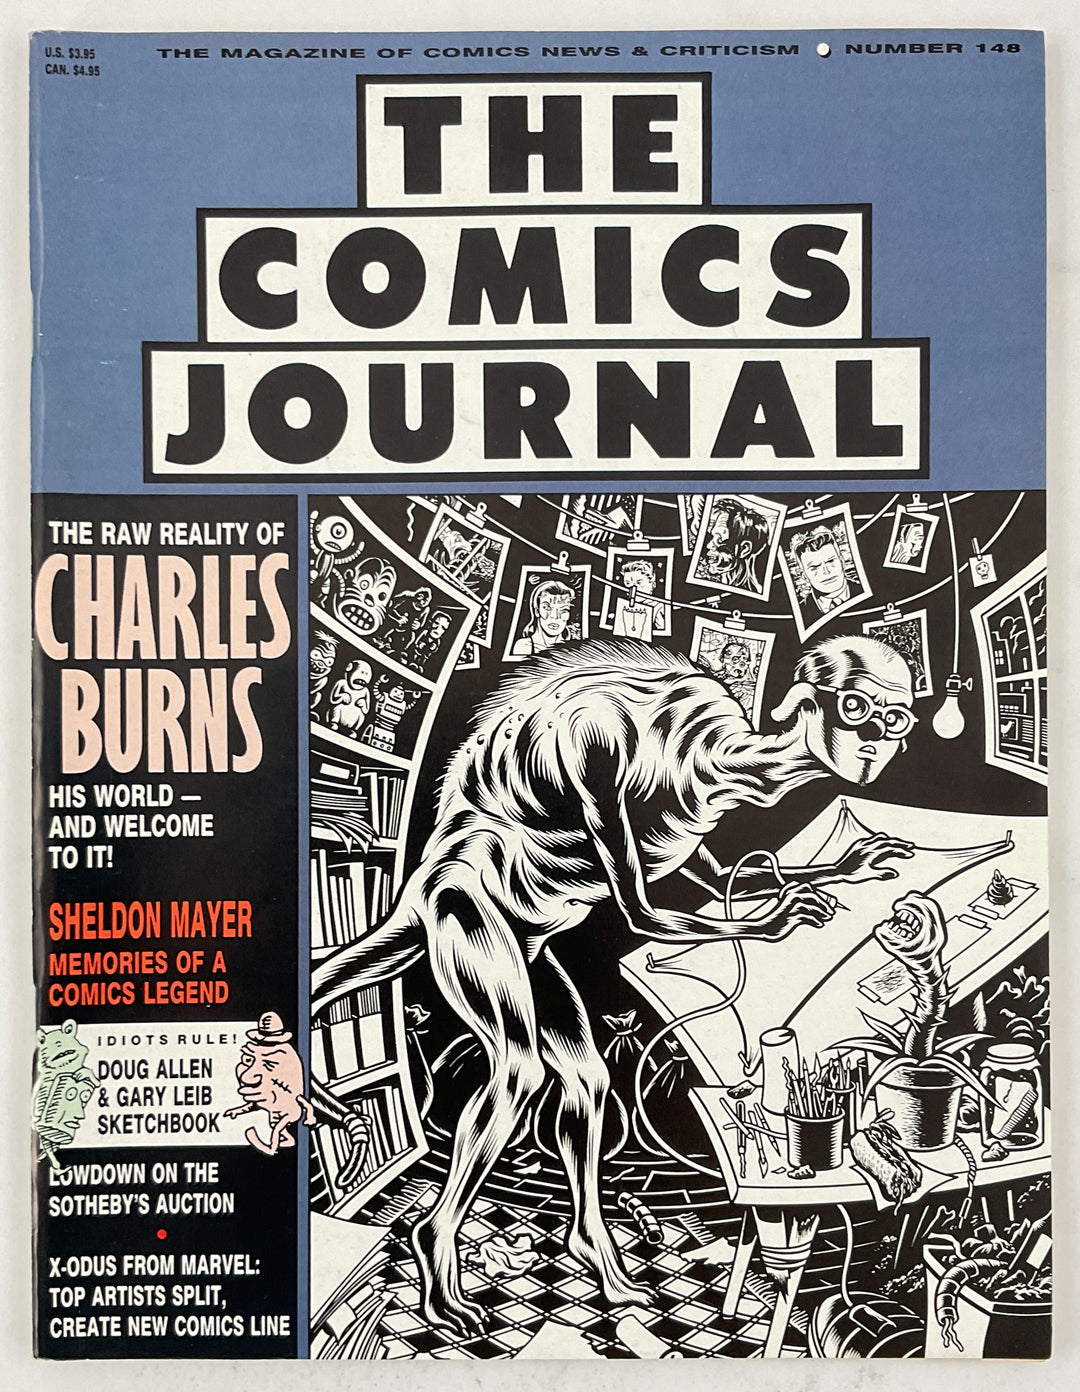 The Comics Journal #148